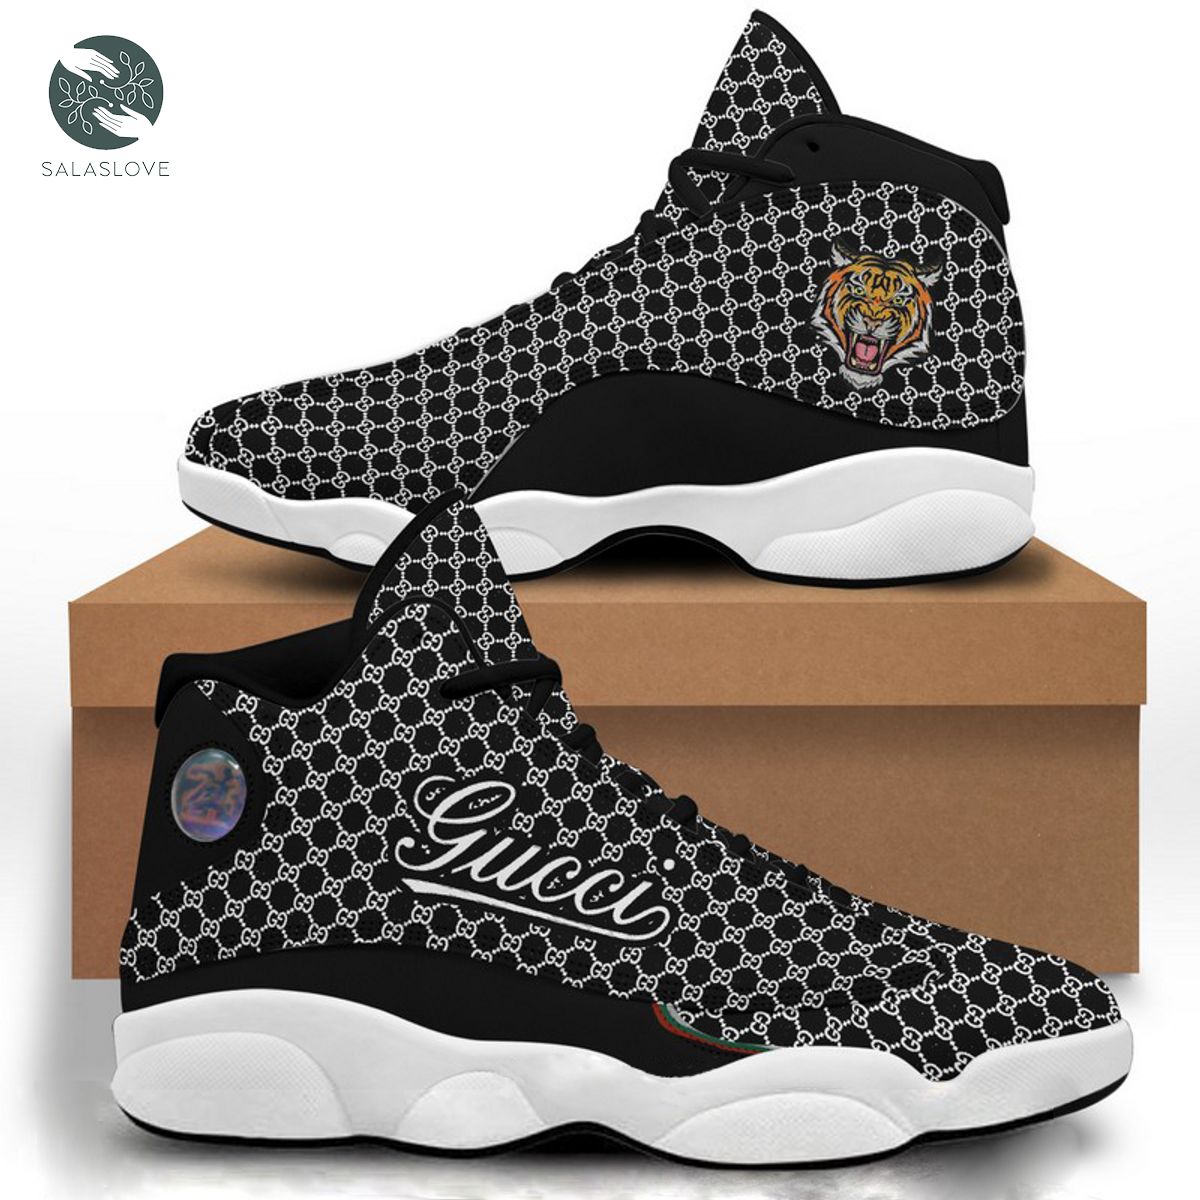 New Gucci Tiger Black Air Jordan 13 Sneakers Shoes Gifts